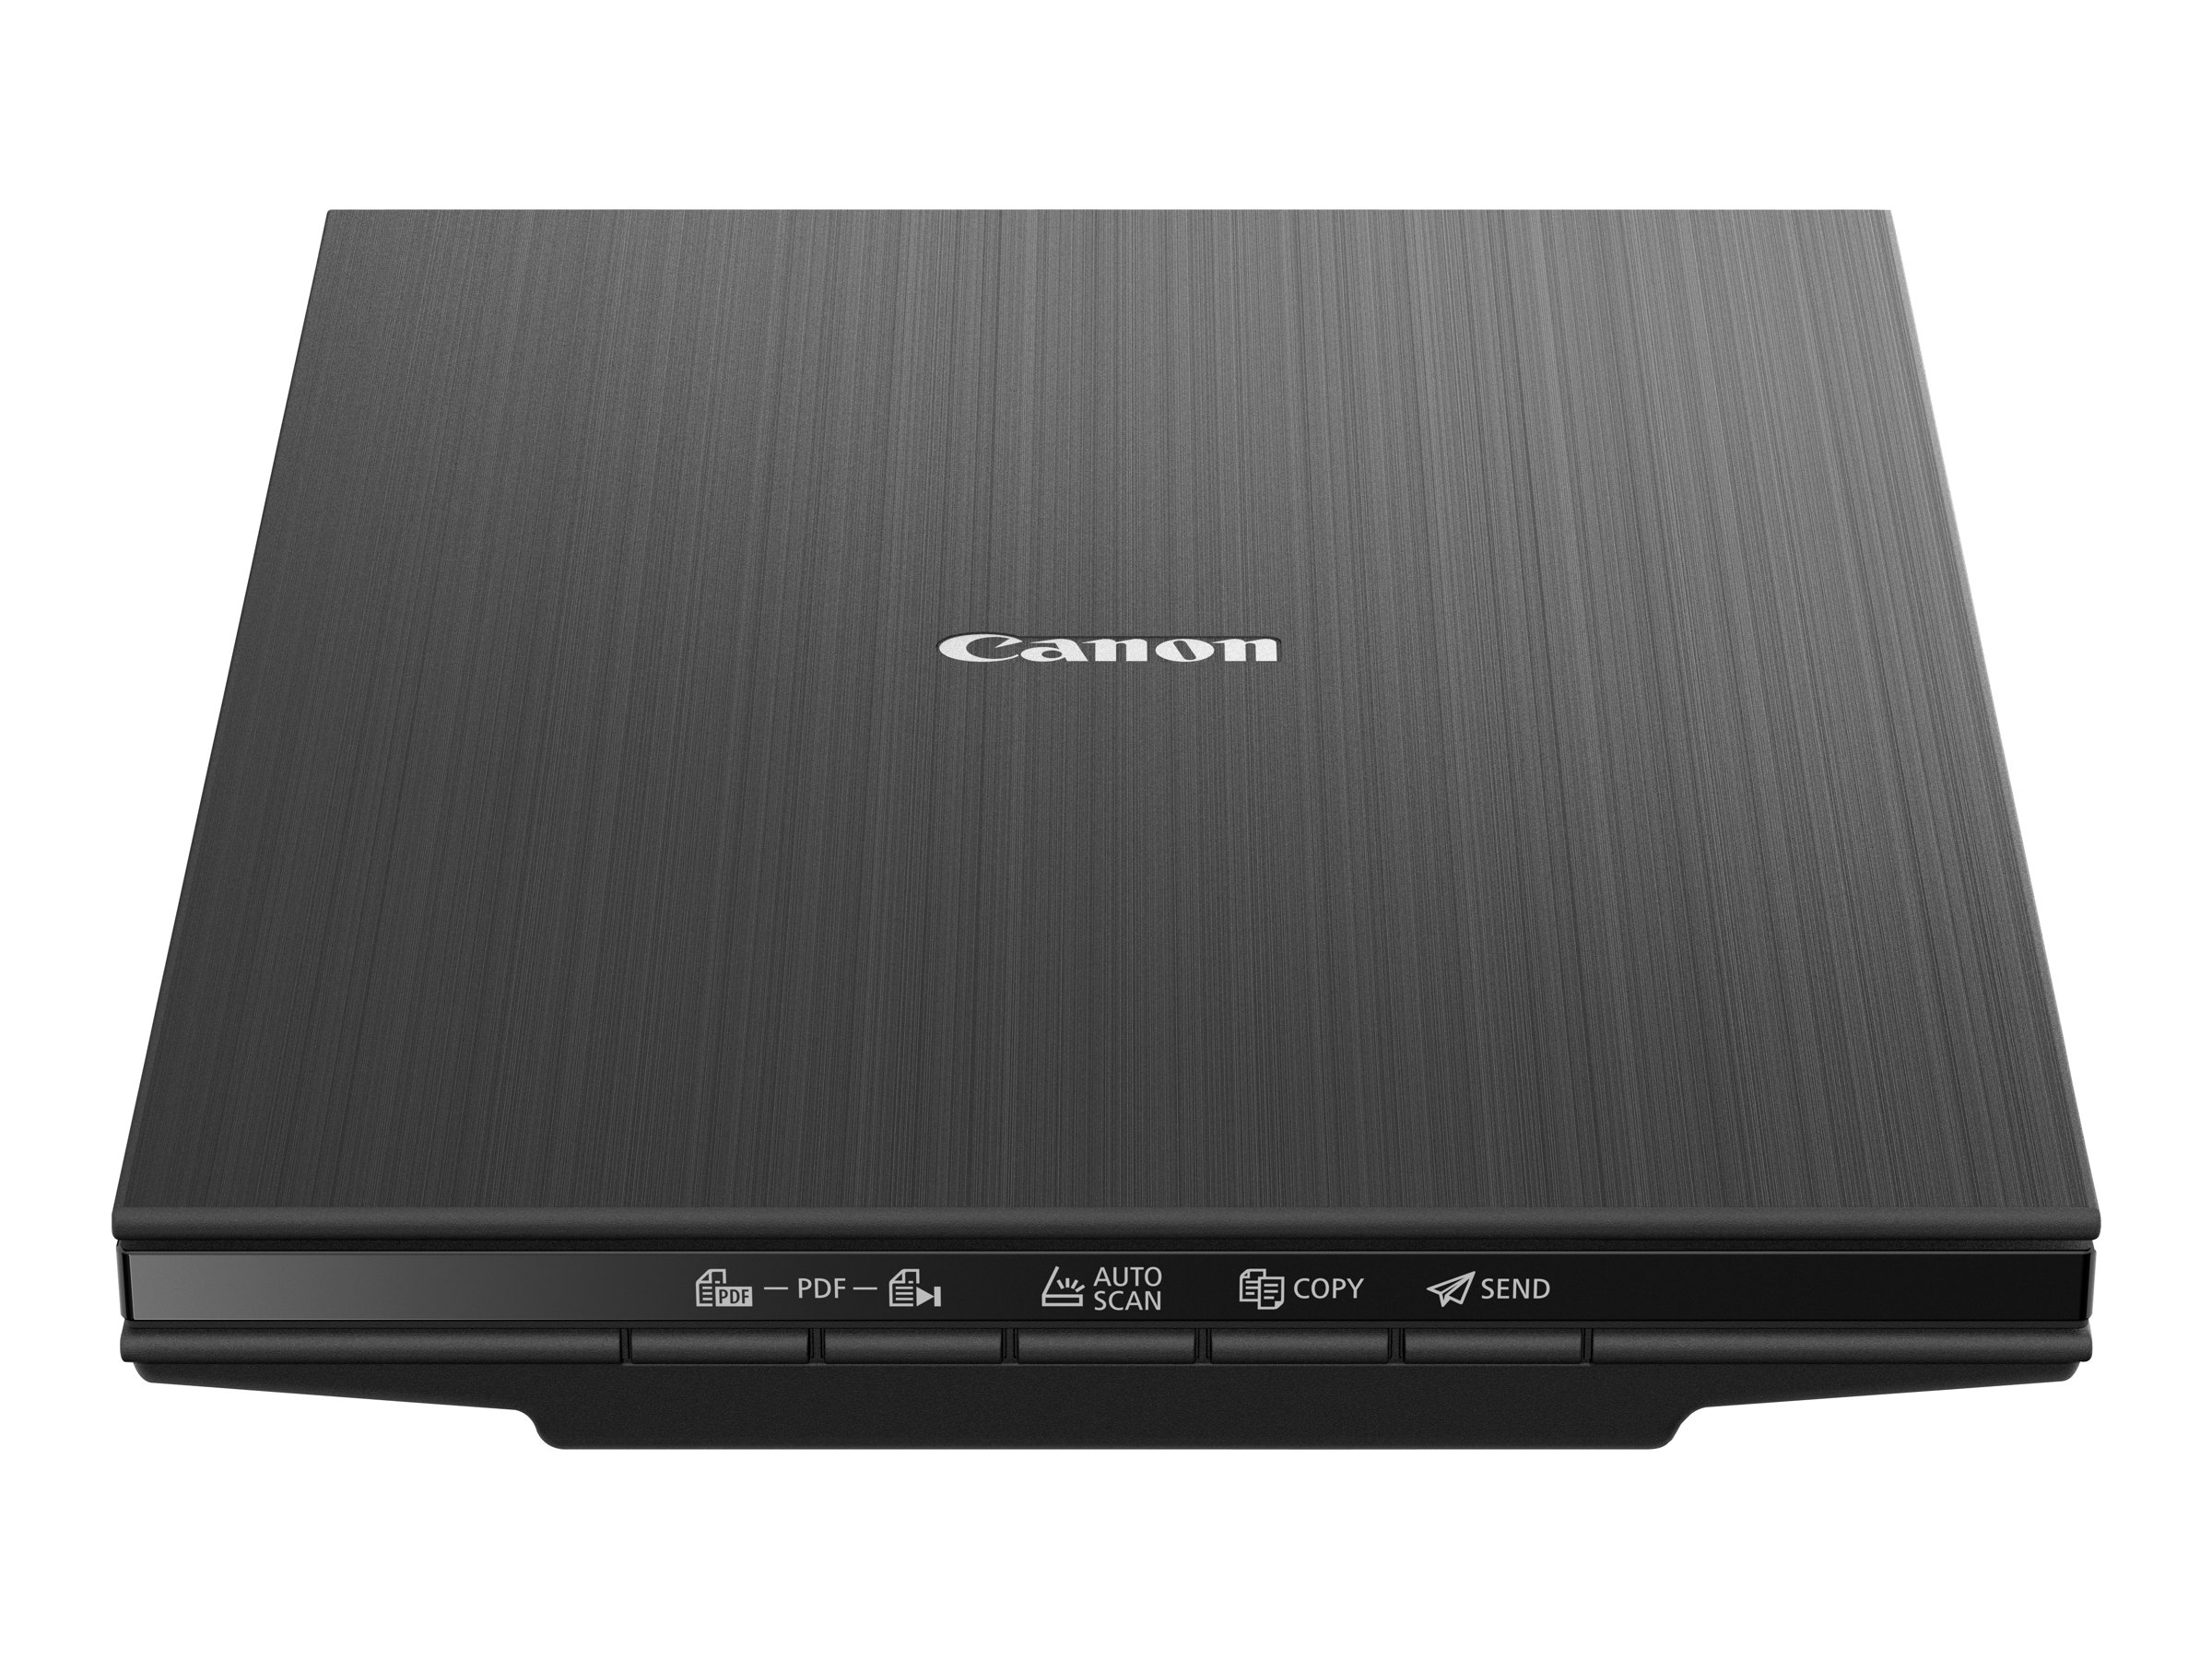 Canon CanoScan LiDE 400 - Flachbettscanner - Contact Image Sensor (CIS) - A4/Letter - 4800 dpi x 4800 dpi - USB-C